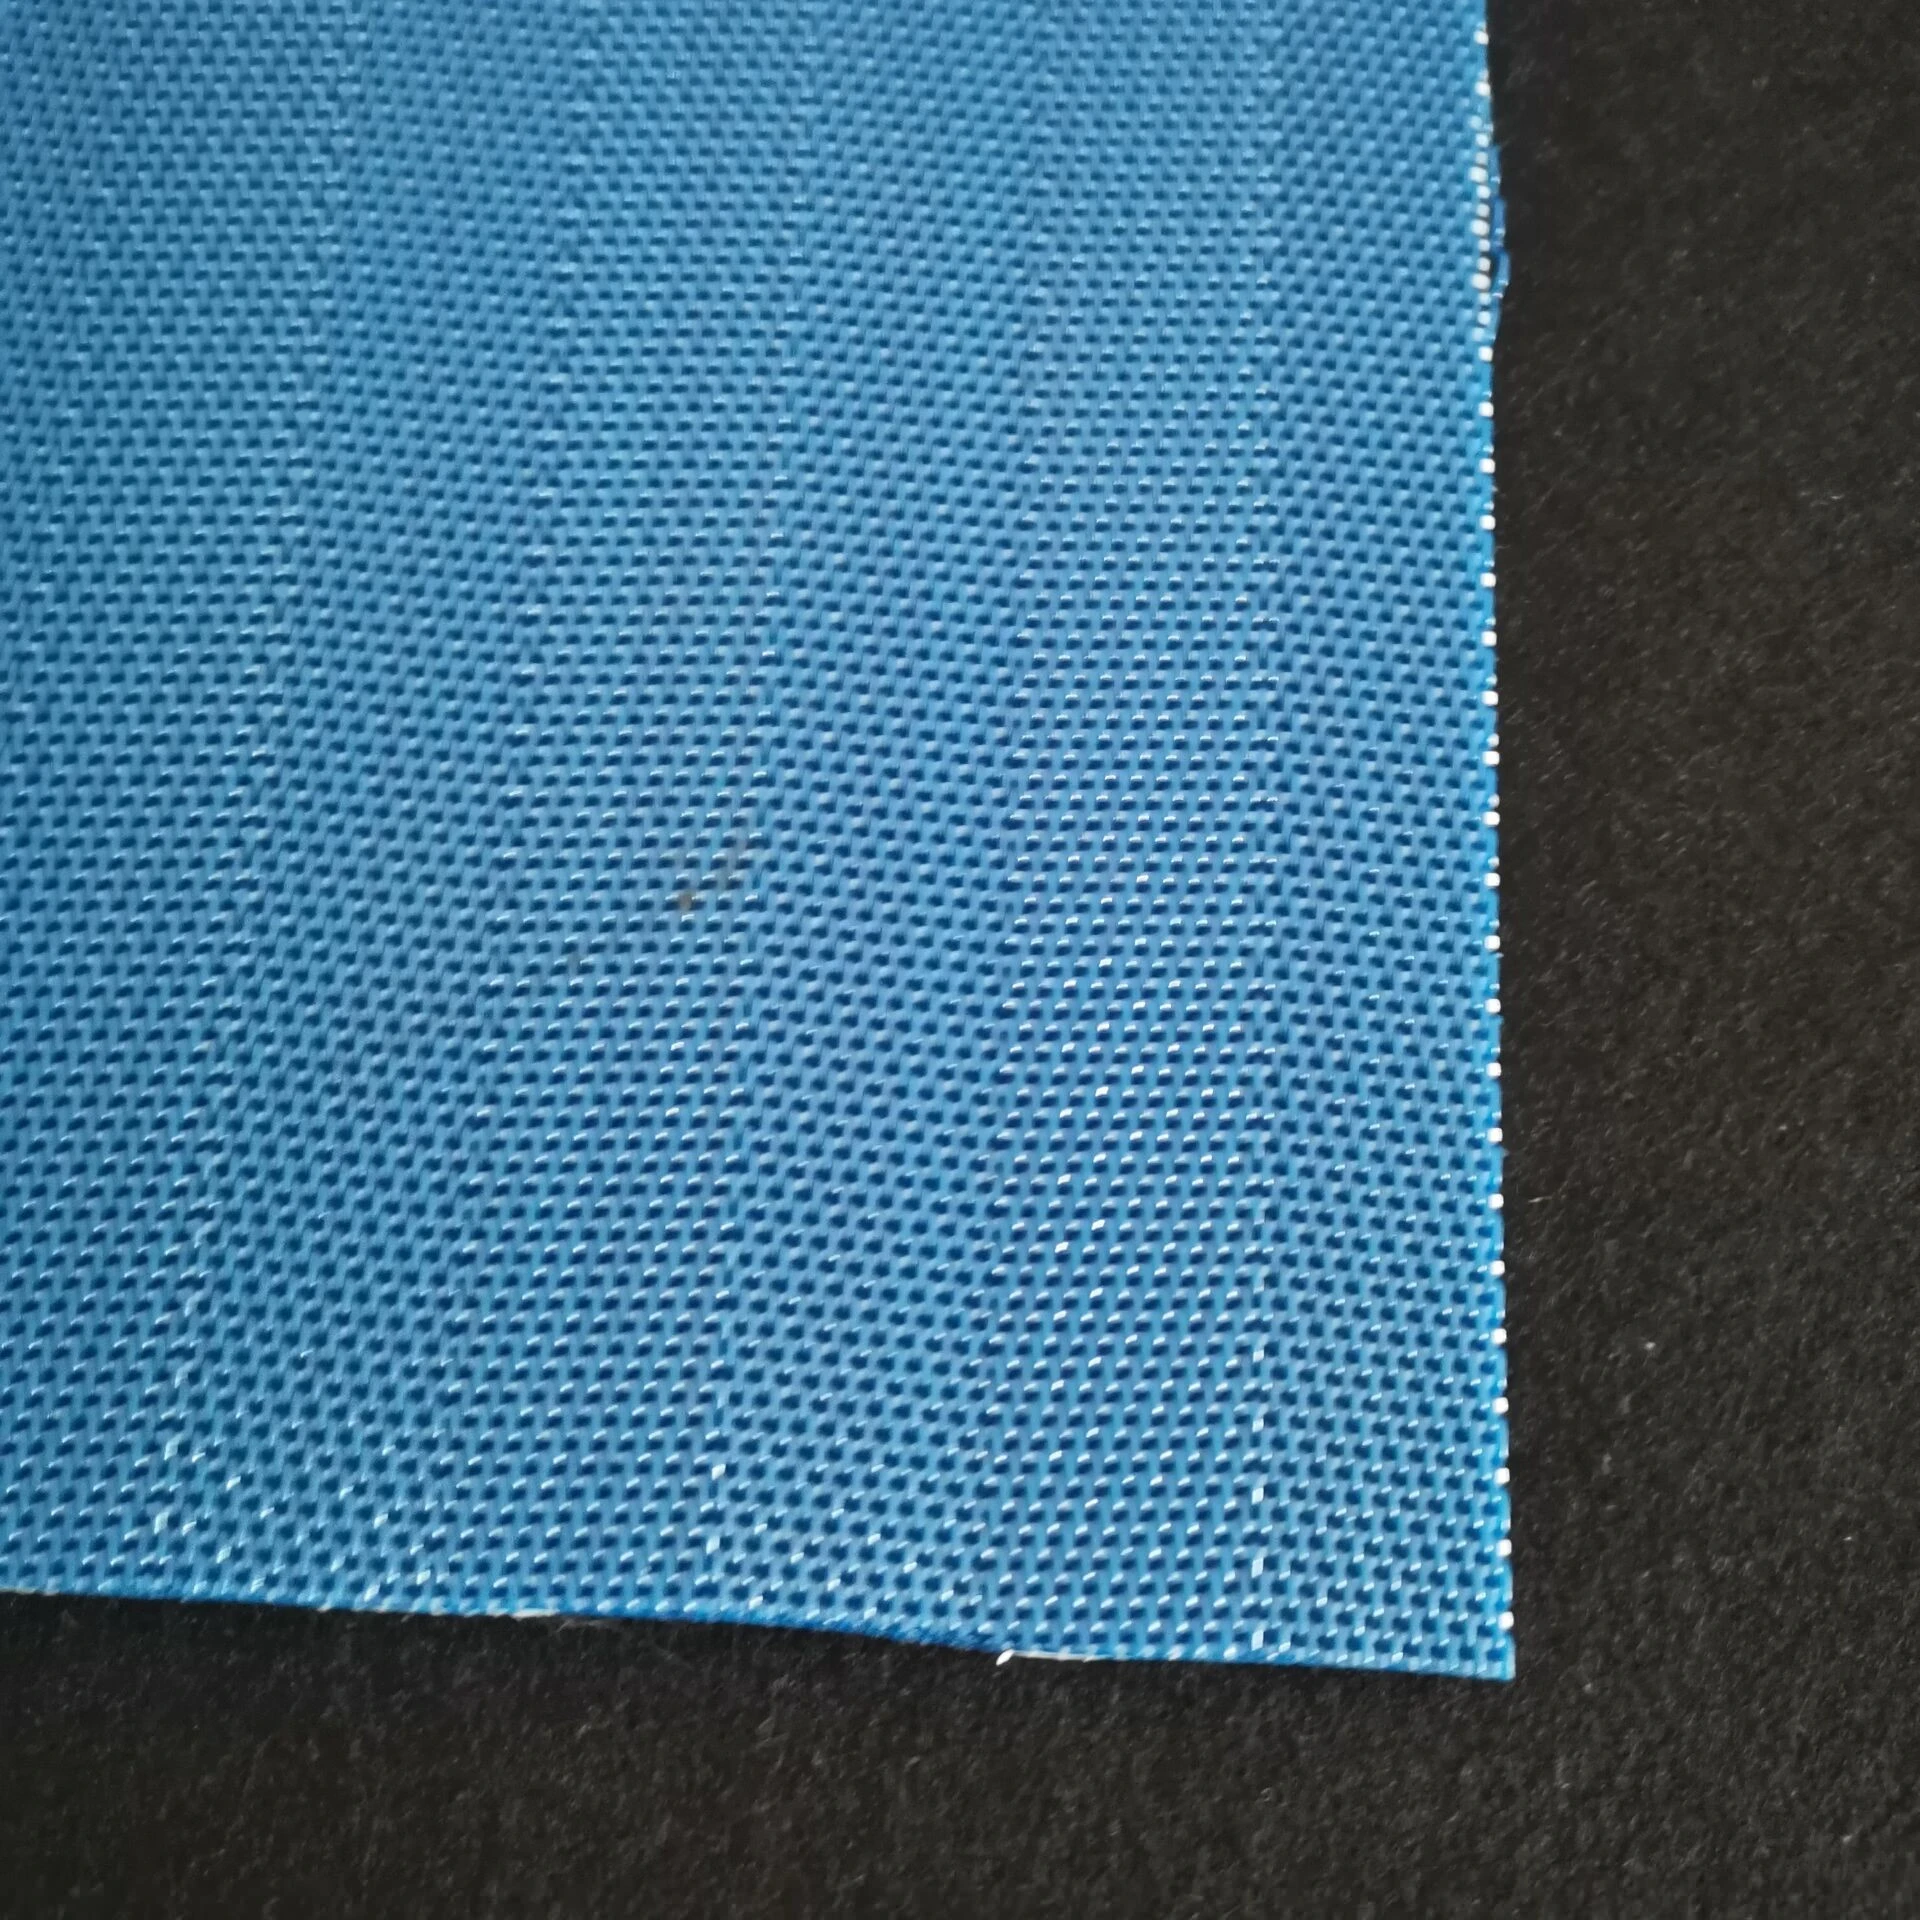 Sludge dewatering mesh belt polyester forming fabrics mesh conveyor belt